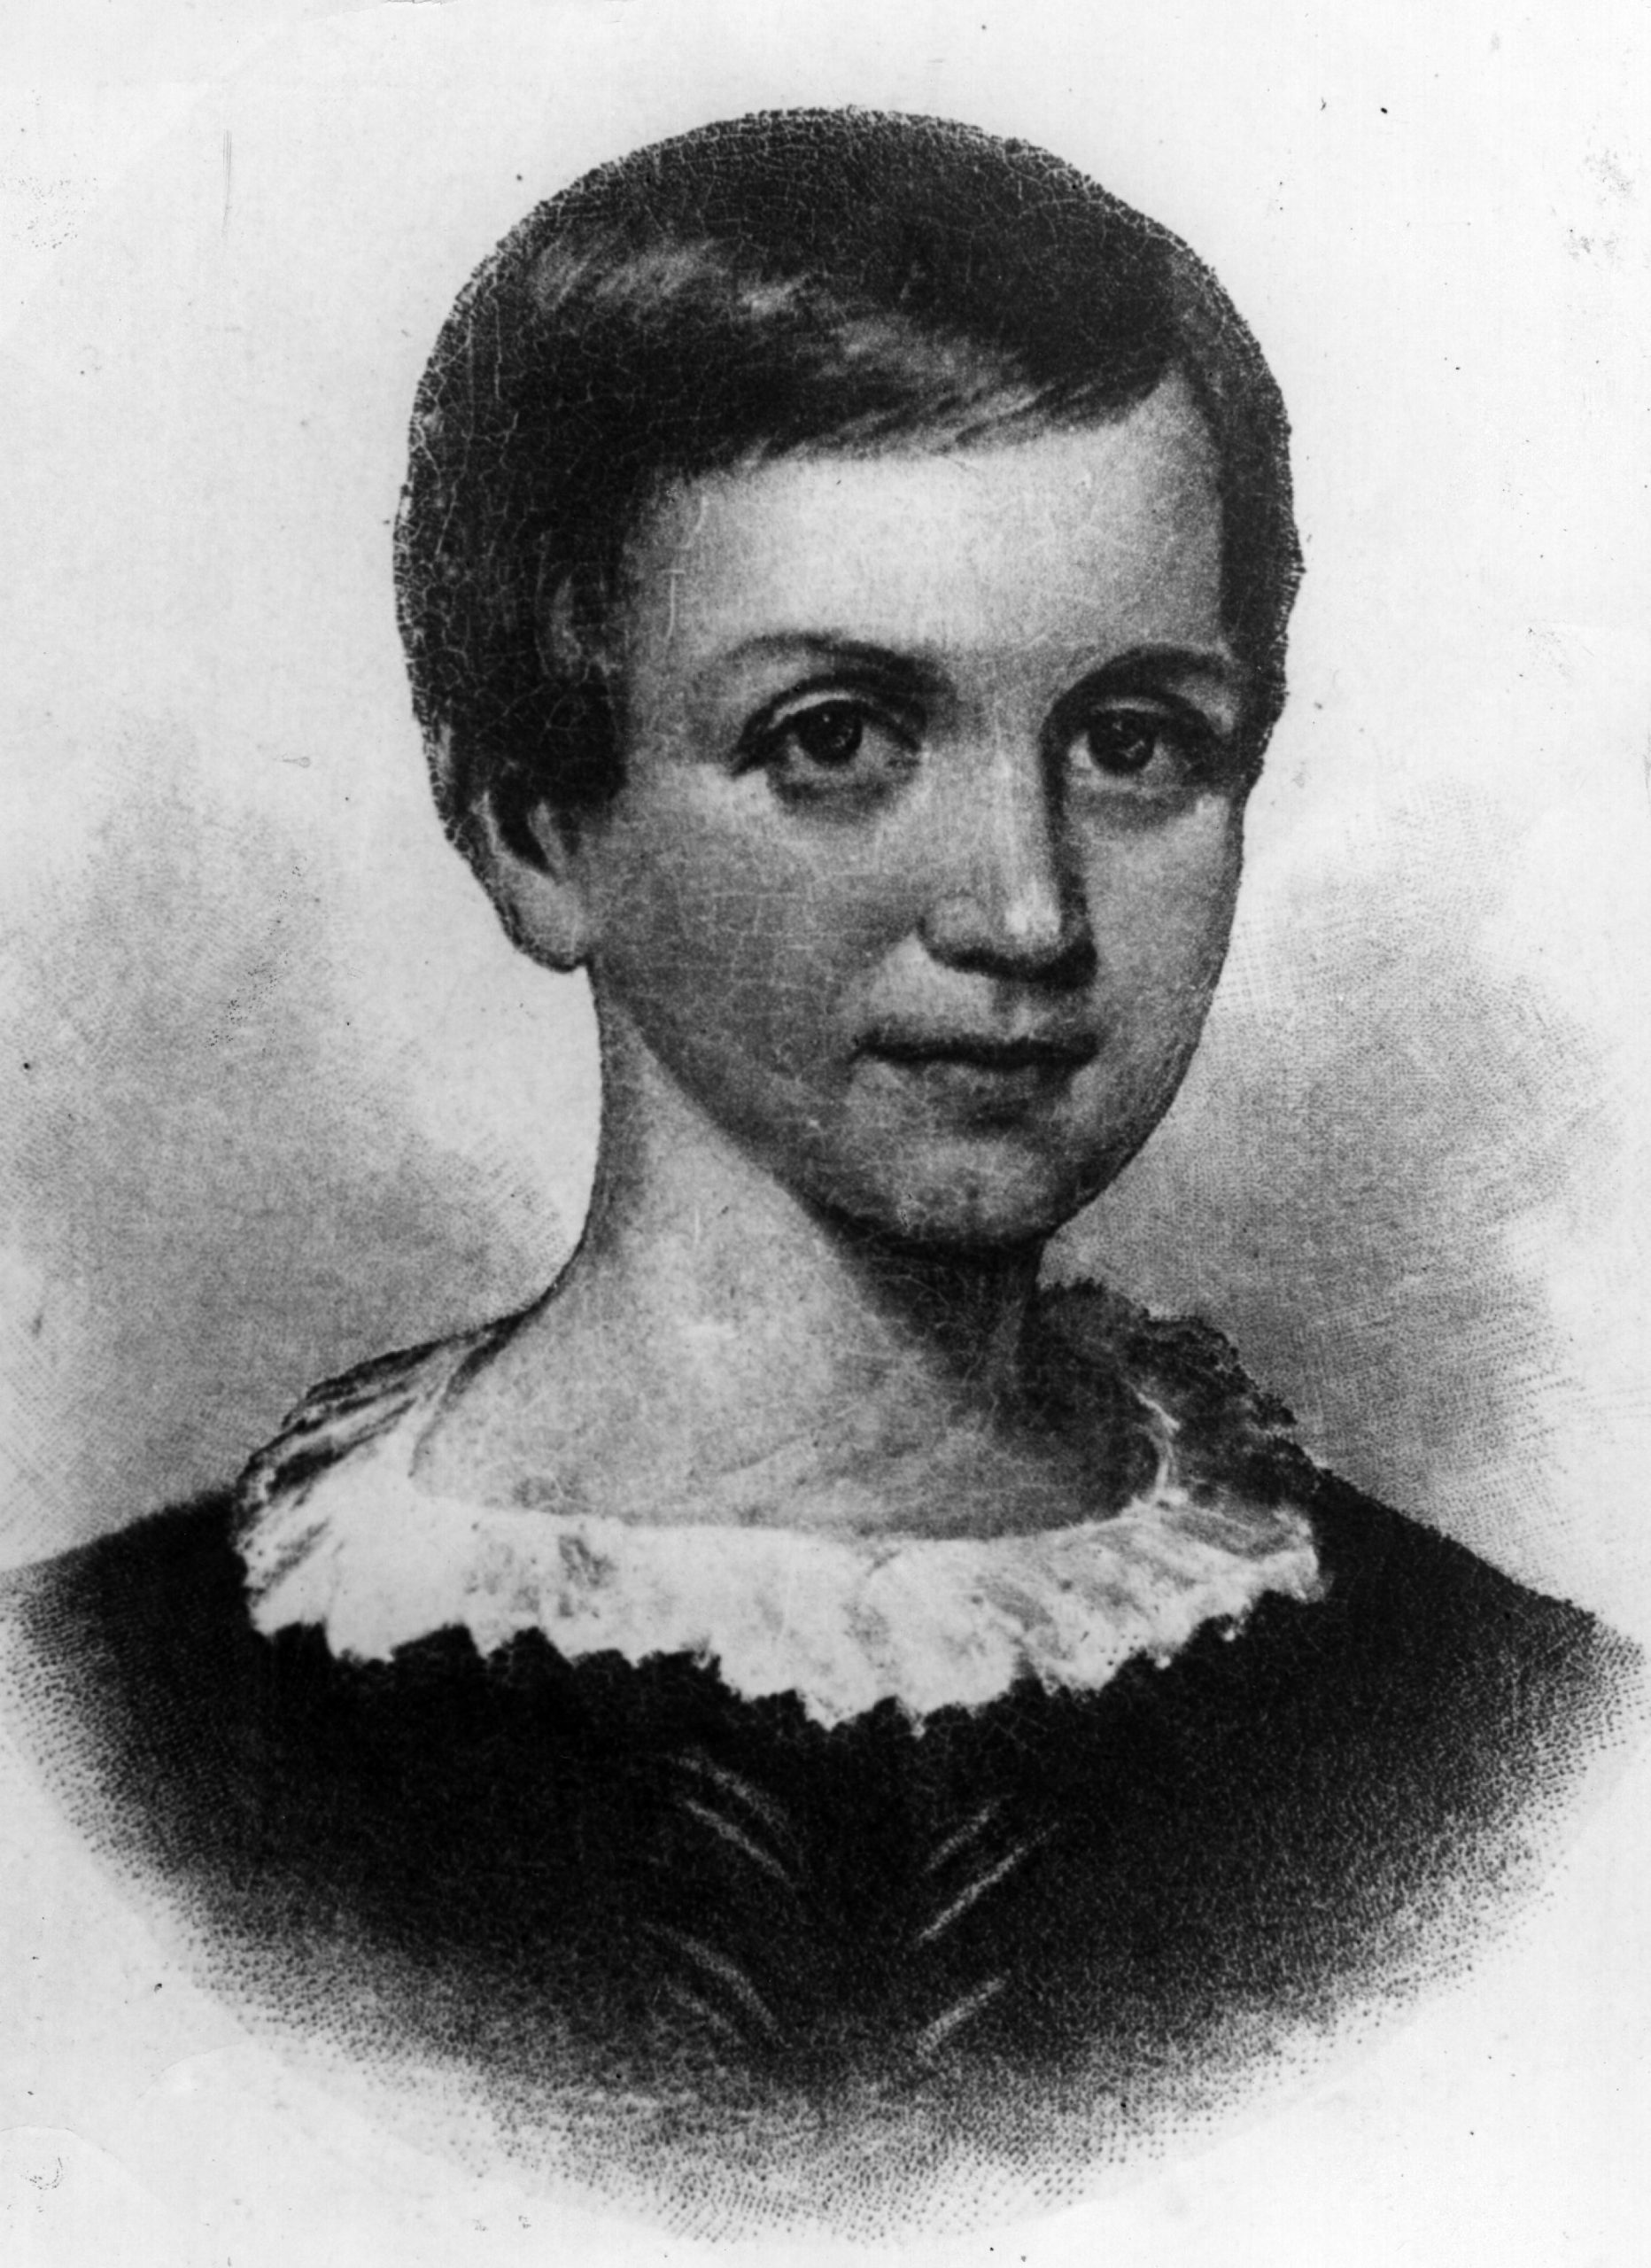 Emily Dickinson photo